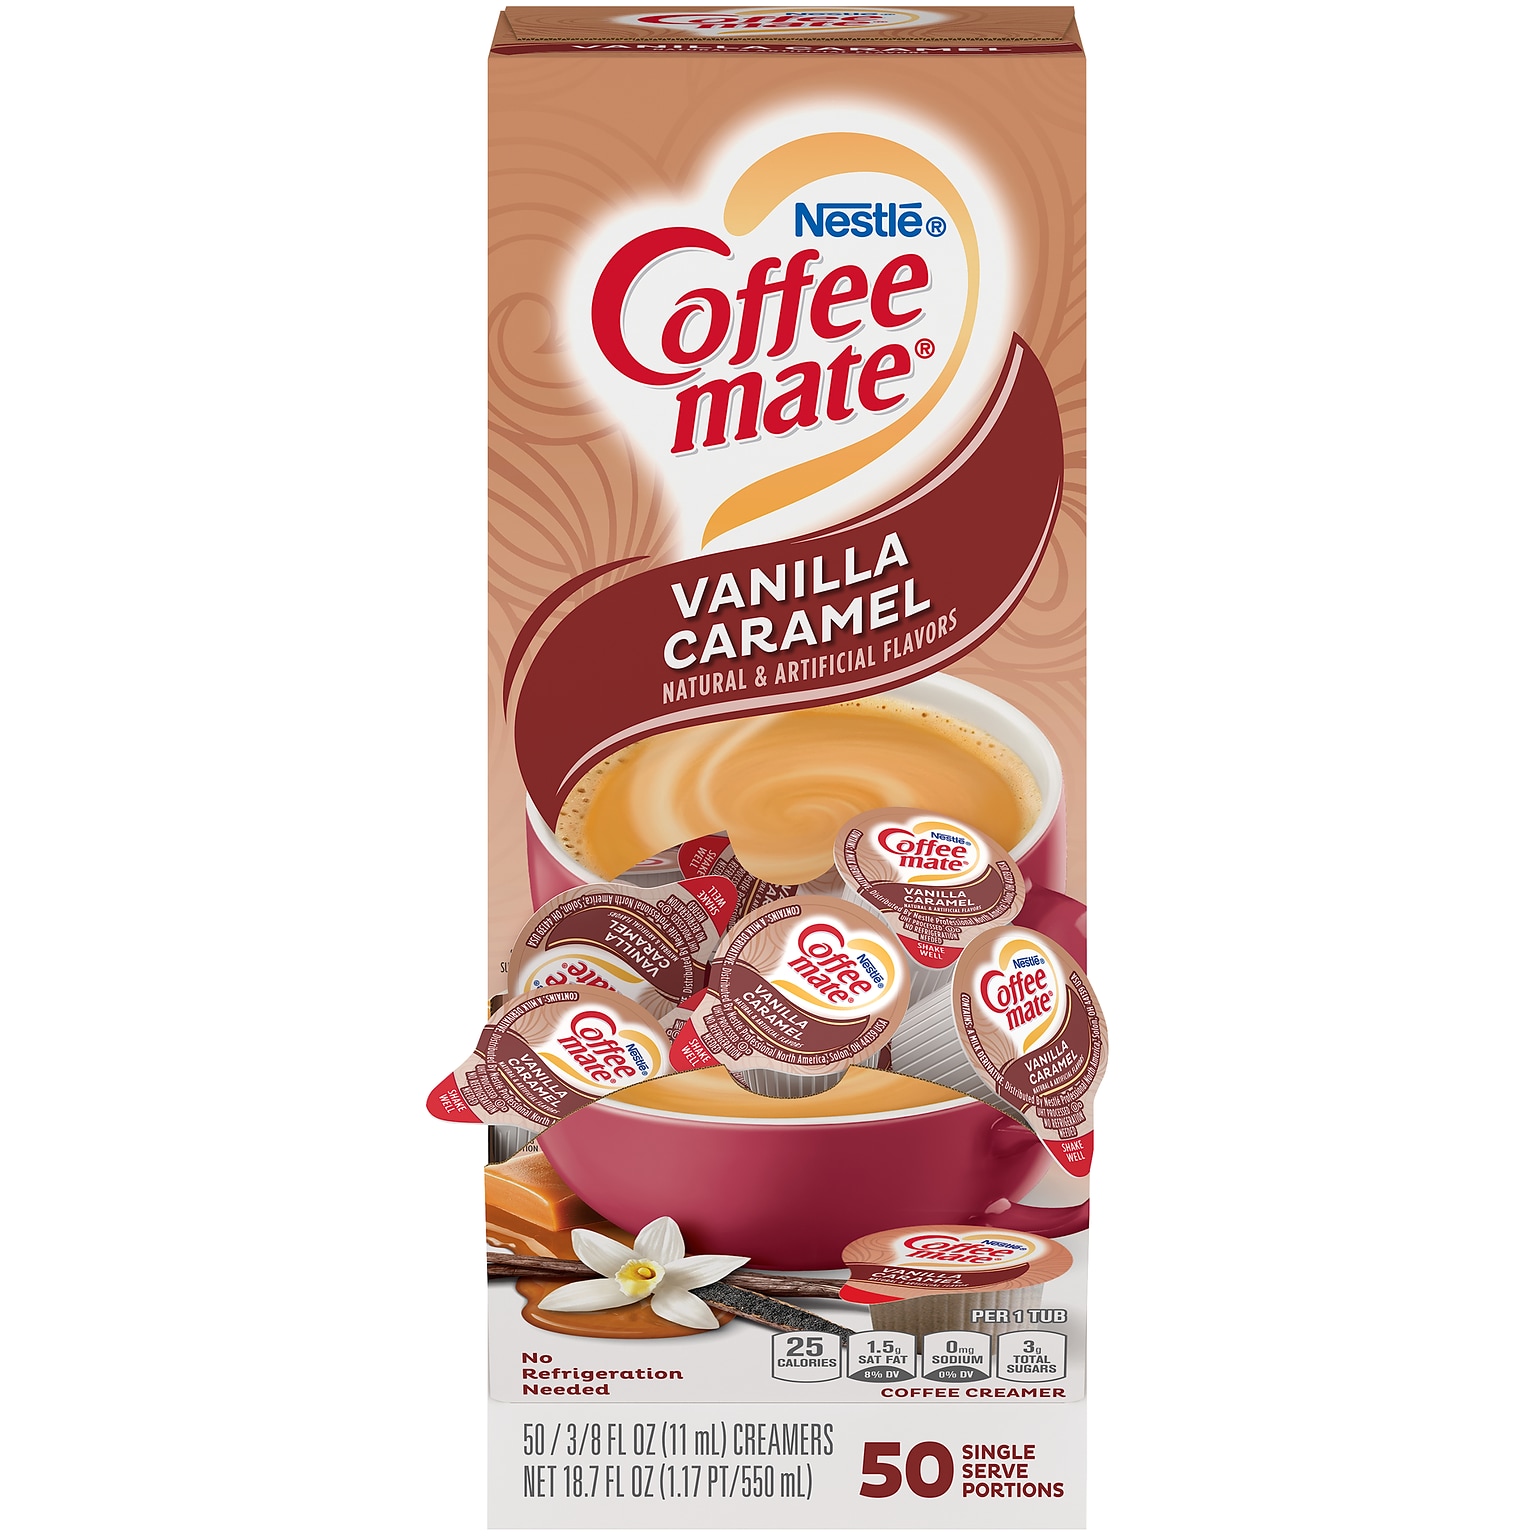 Coffee mate Vanilla Caramel Liquid Creamer, 0.38 Oz., 50/Box (79129)